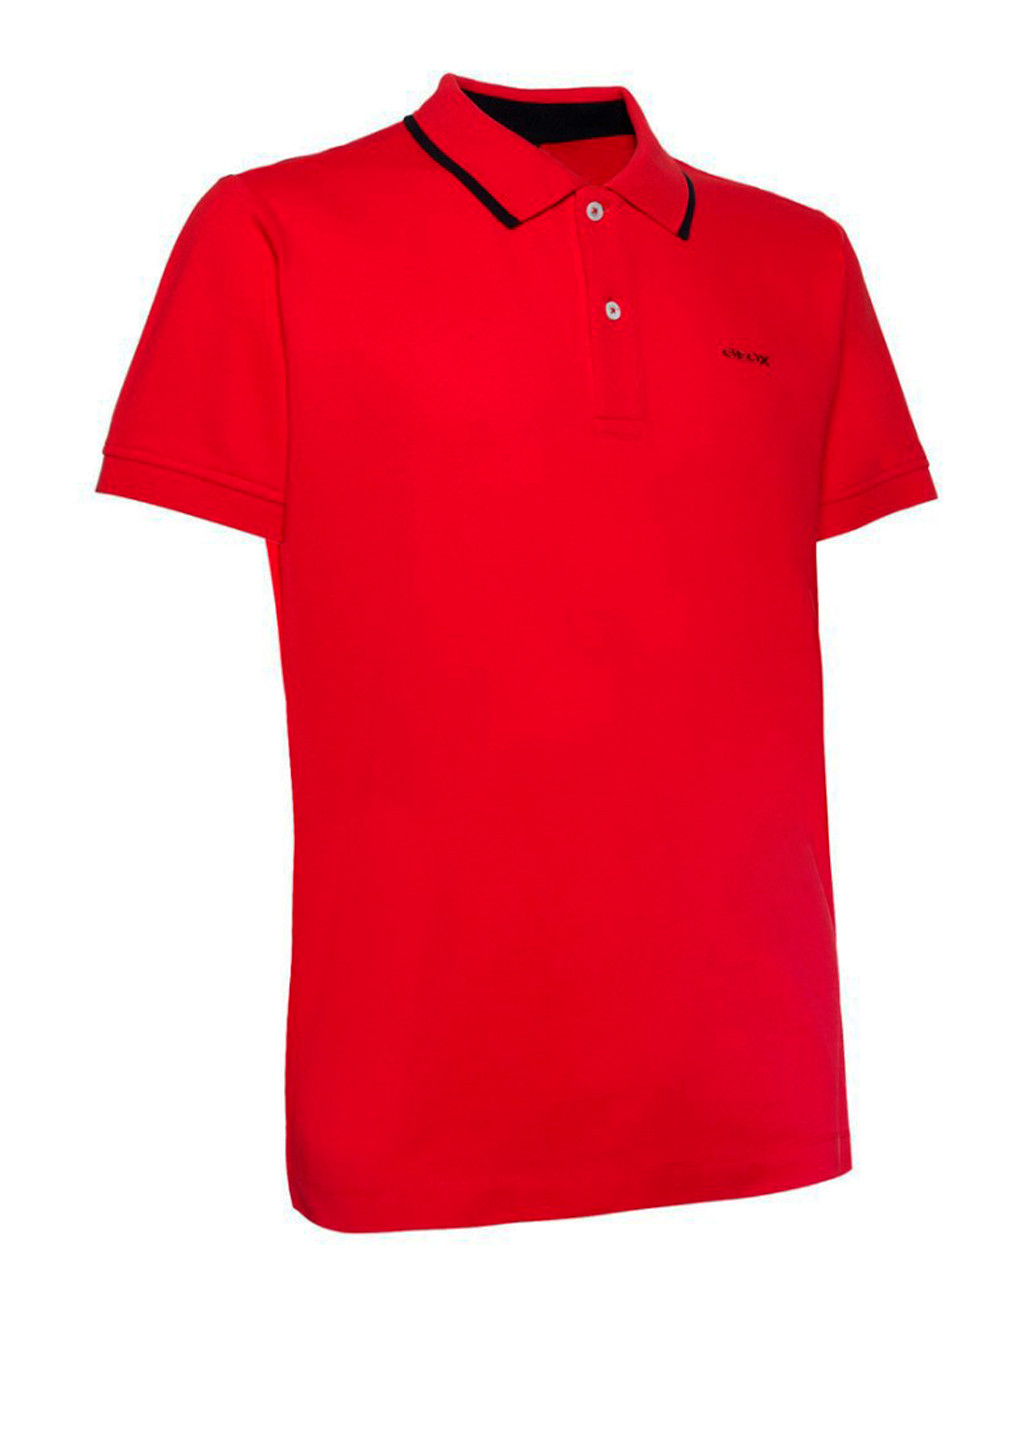 Красная футболка-красная мужская футболка-поло для мужчин Geox однотонная